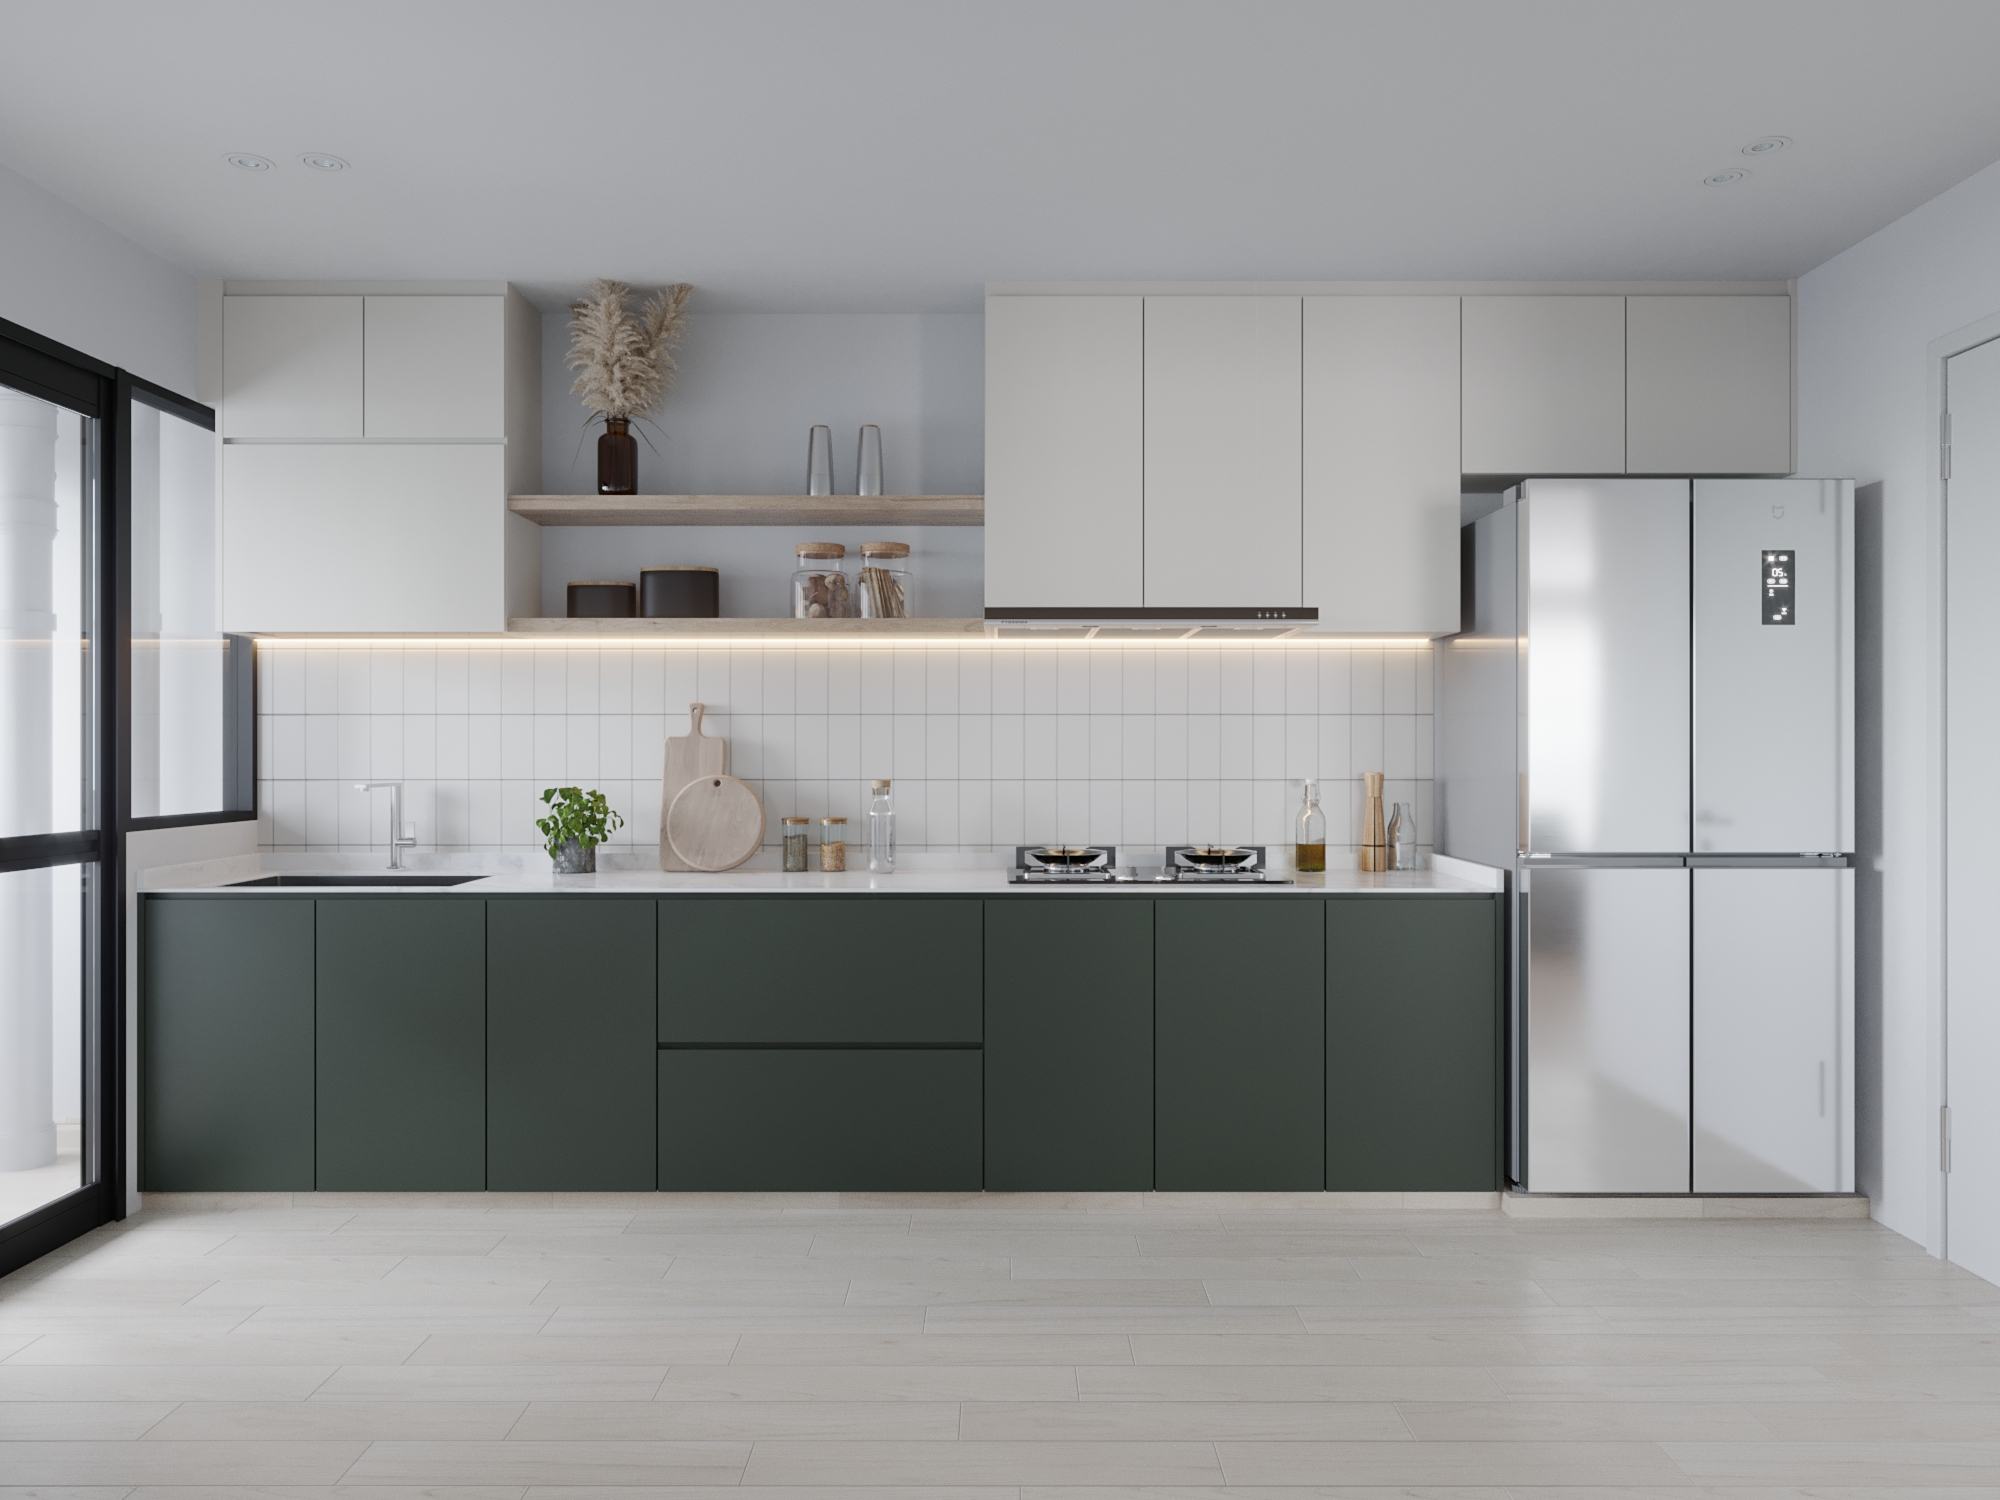 Kitchen - Interior Design Firm: Brickwood Studio - Renovation Budget